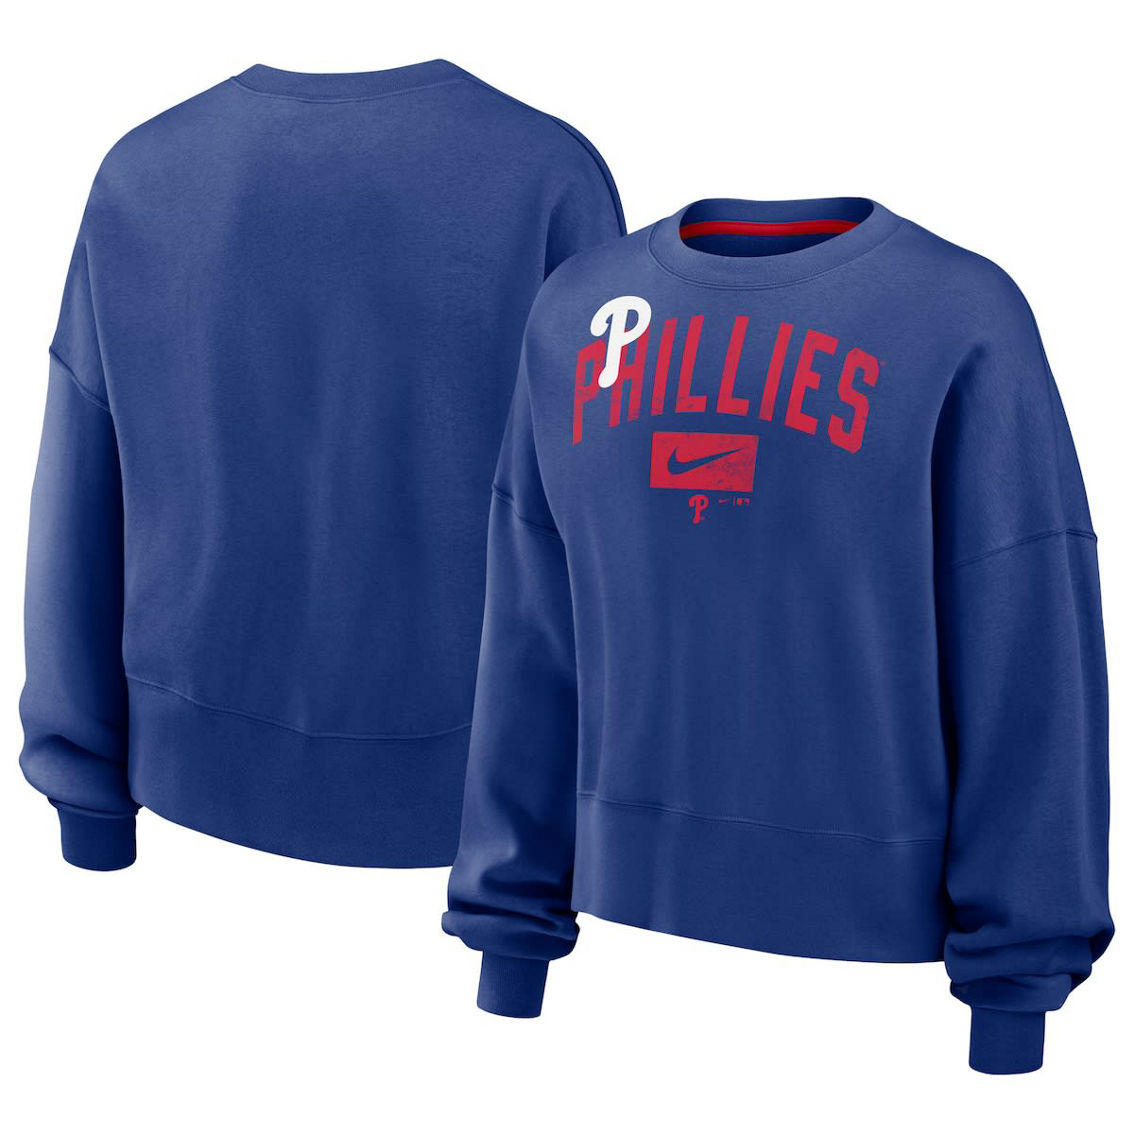 Nike Women's Royal Philadelphia Phillies Pullover Sweatshirt - Image 2 of 4